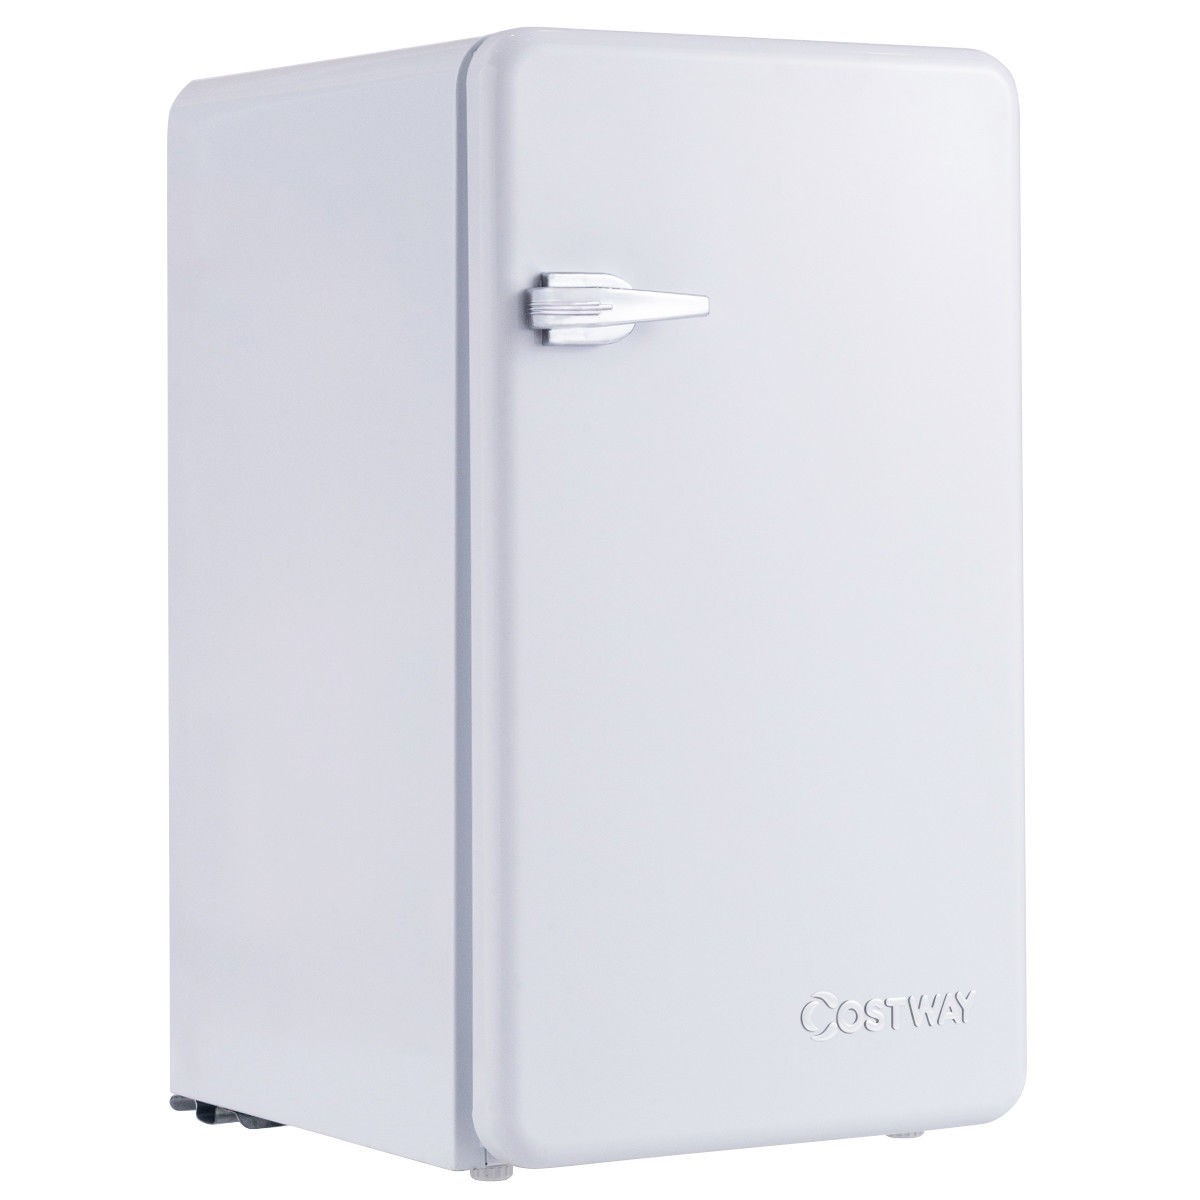 Costway 3 2 cu ft retro compact refrigerator w freezer